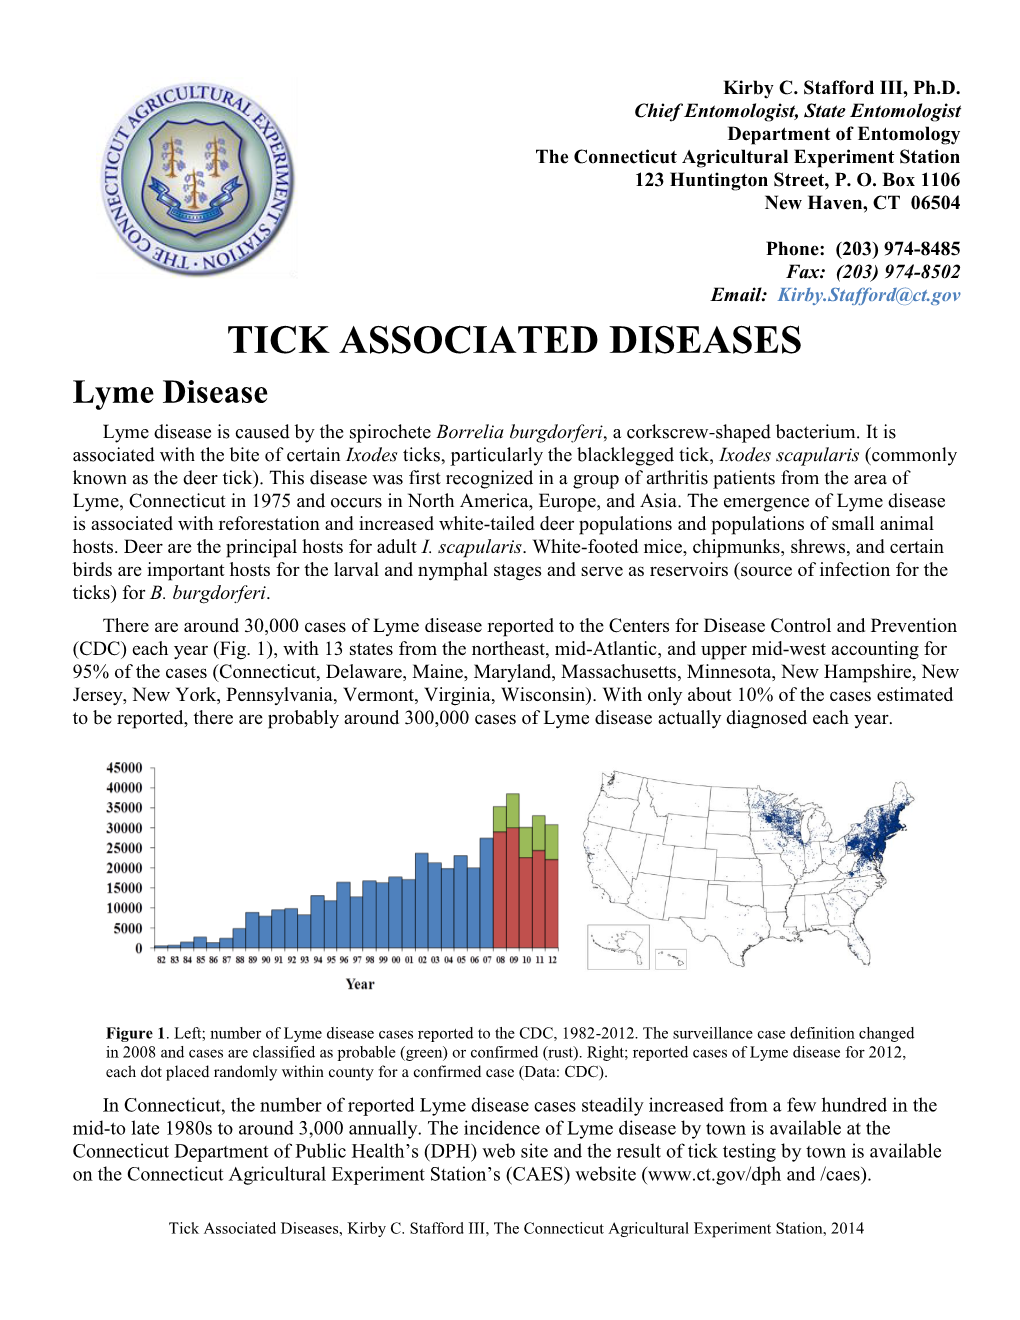 Tick Associated Diseases